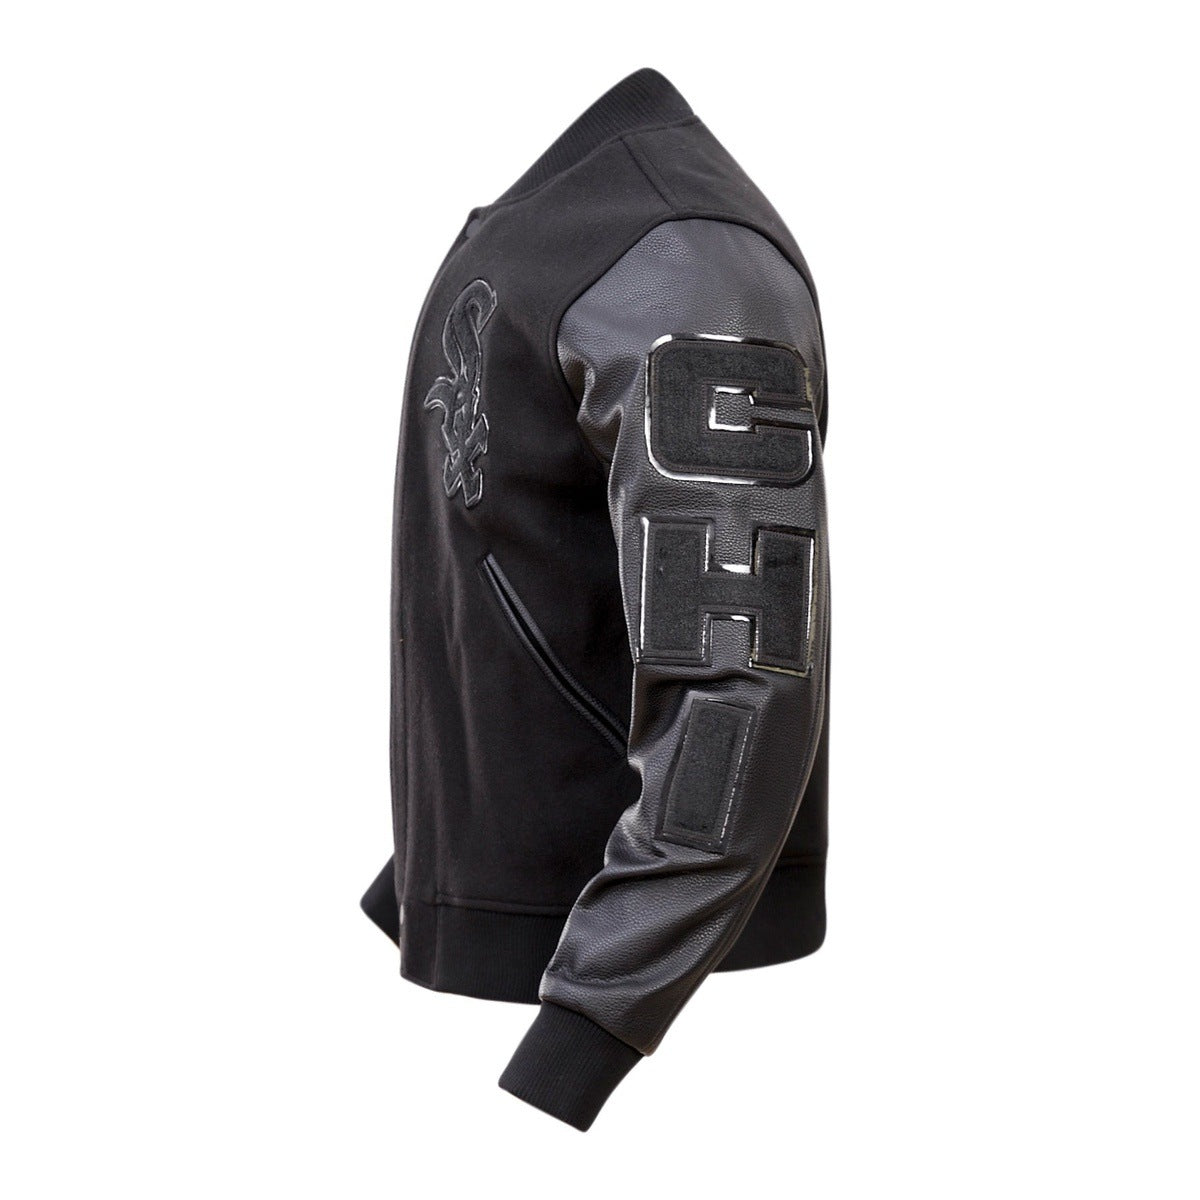 Men's Chicago White Sox Pro Standard Black Remix Full-Zip Varsity Jacket